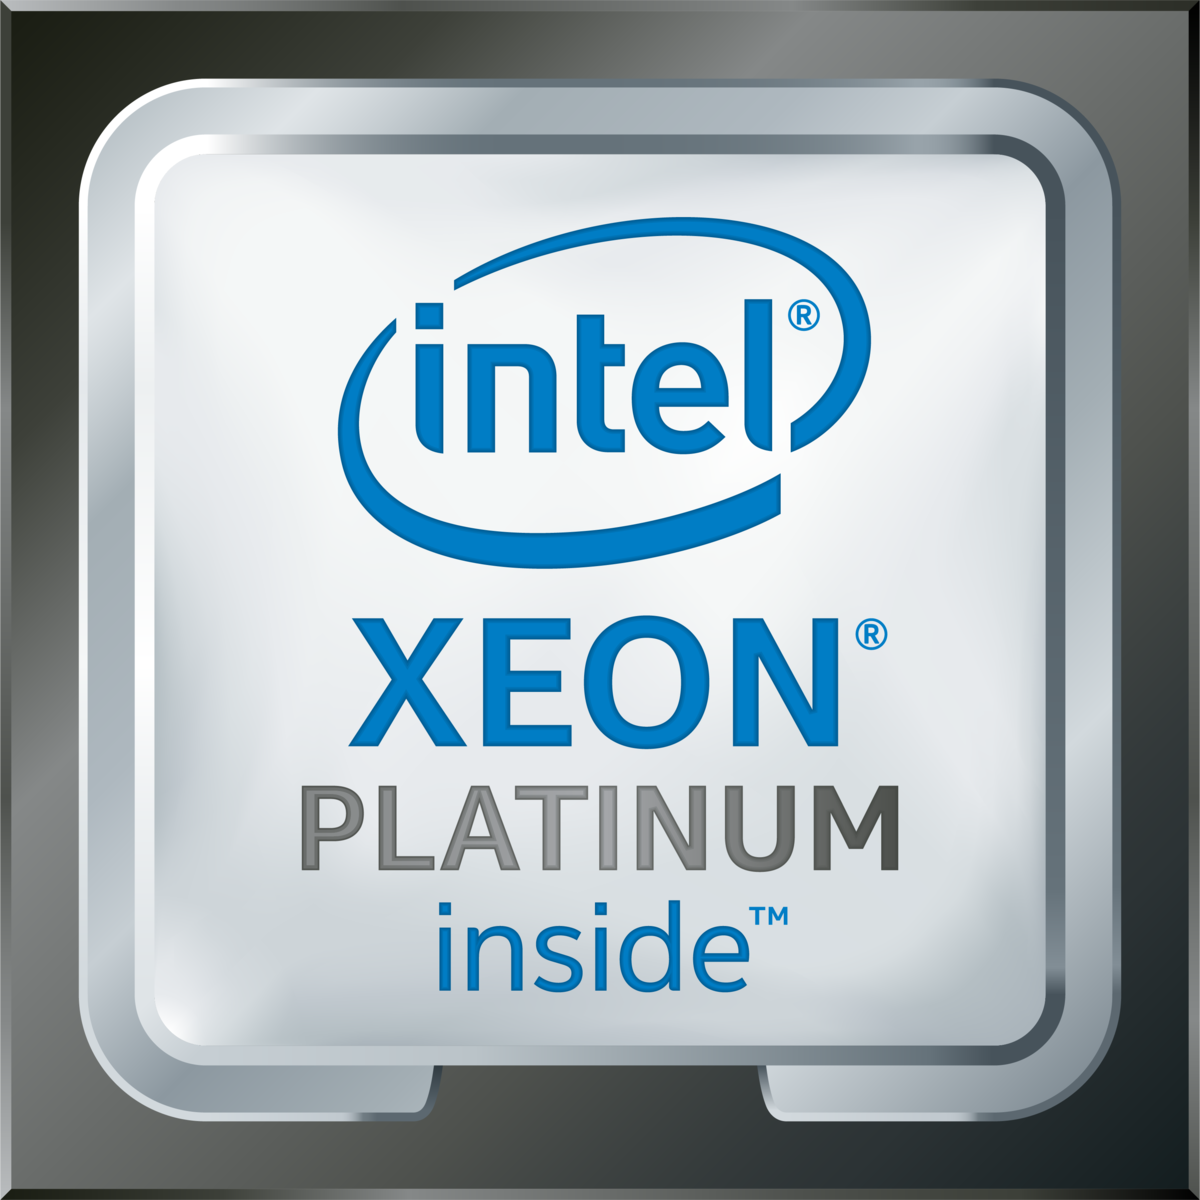 Intel(R) Xeon(R) Platinum 8375C CPU @ 2.90GHz's logo